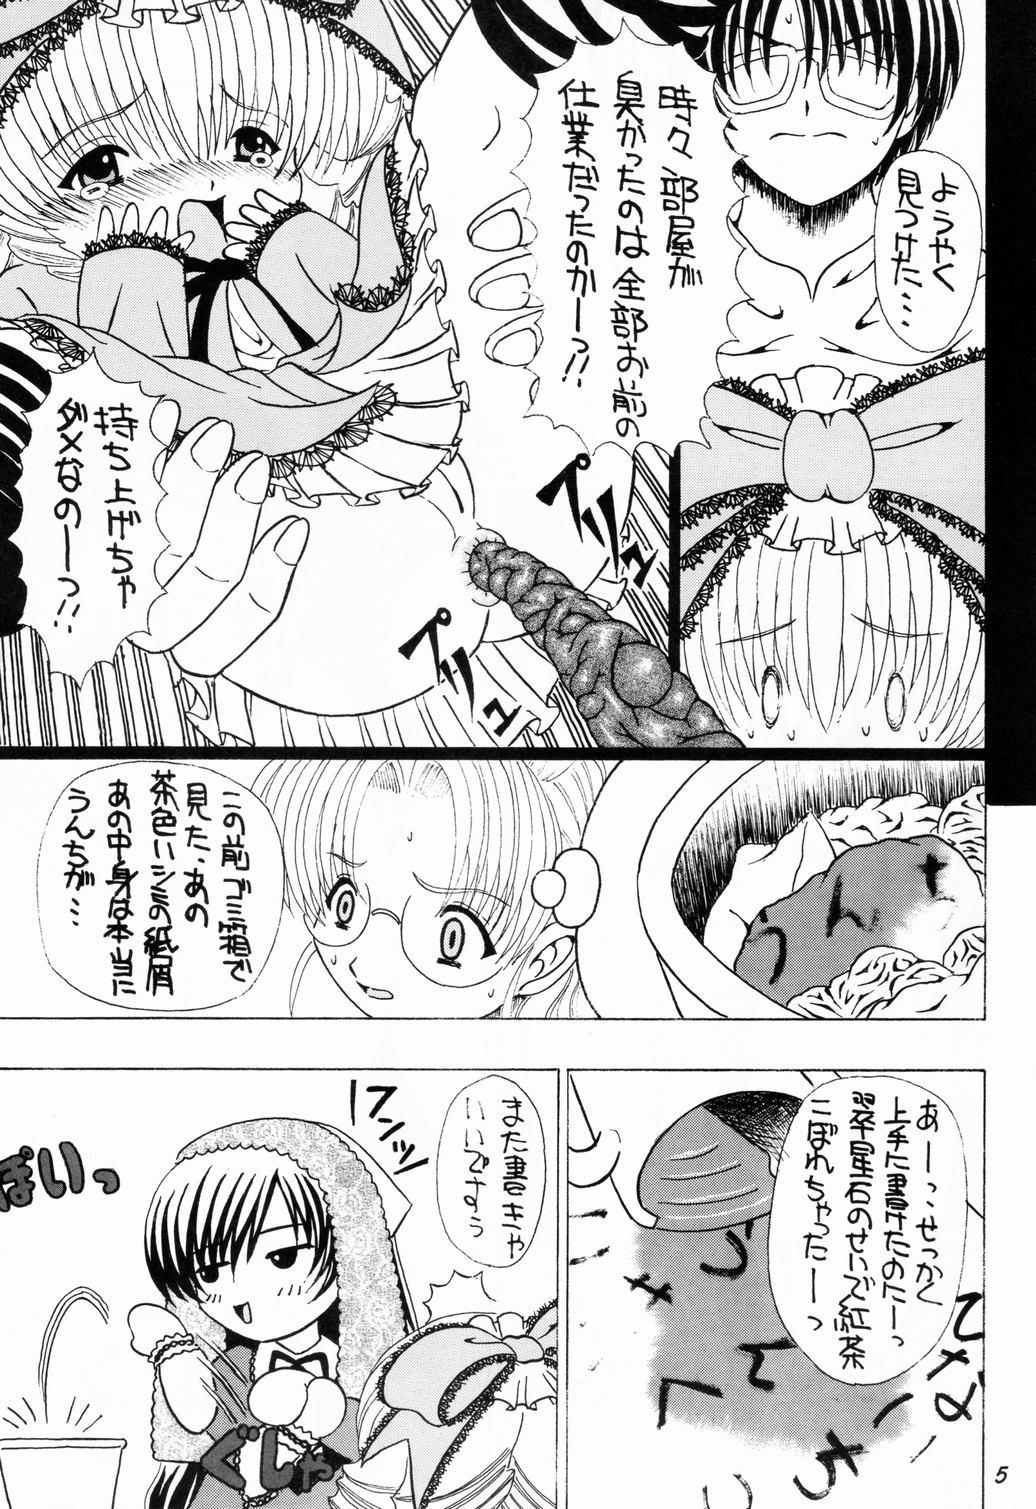 Fat Dengeki Shiri Magazine 8 - Rozen maiden Step Fantasy - Page 4